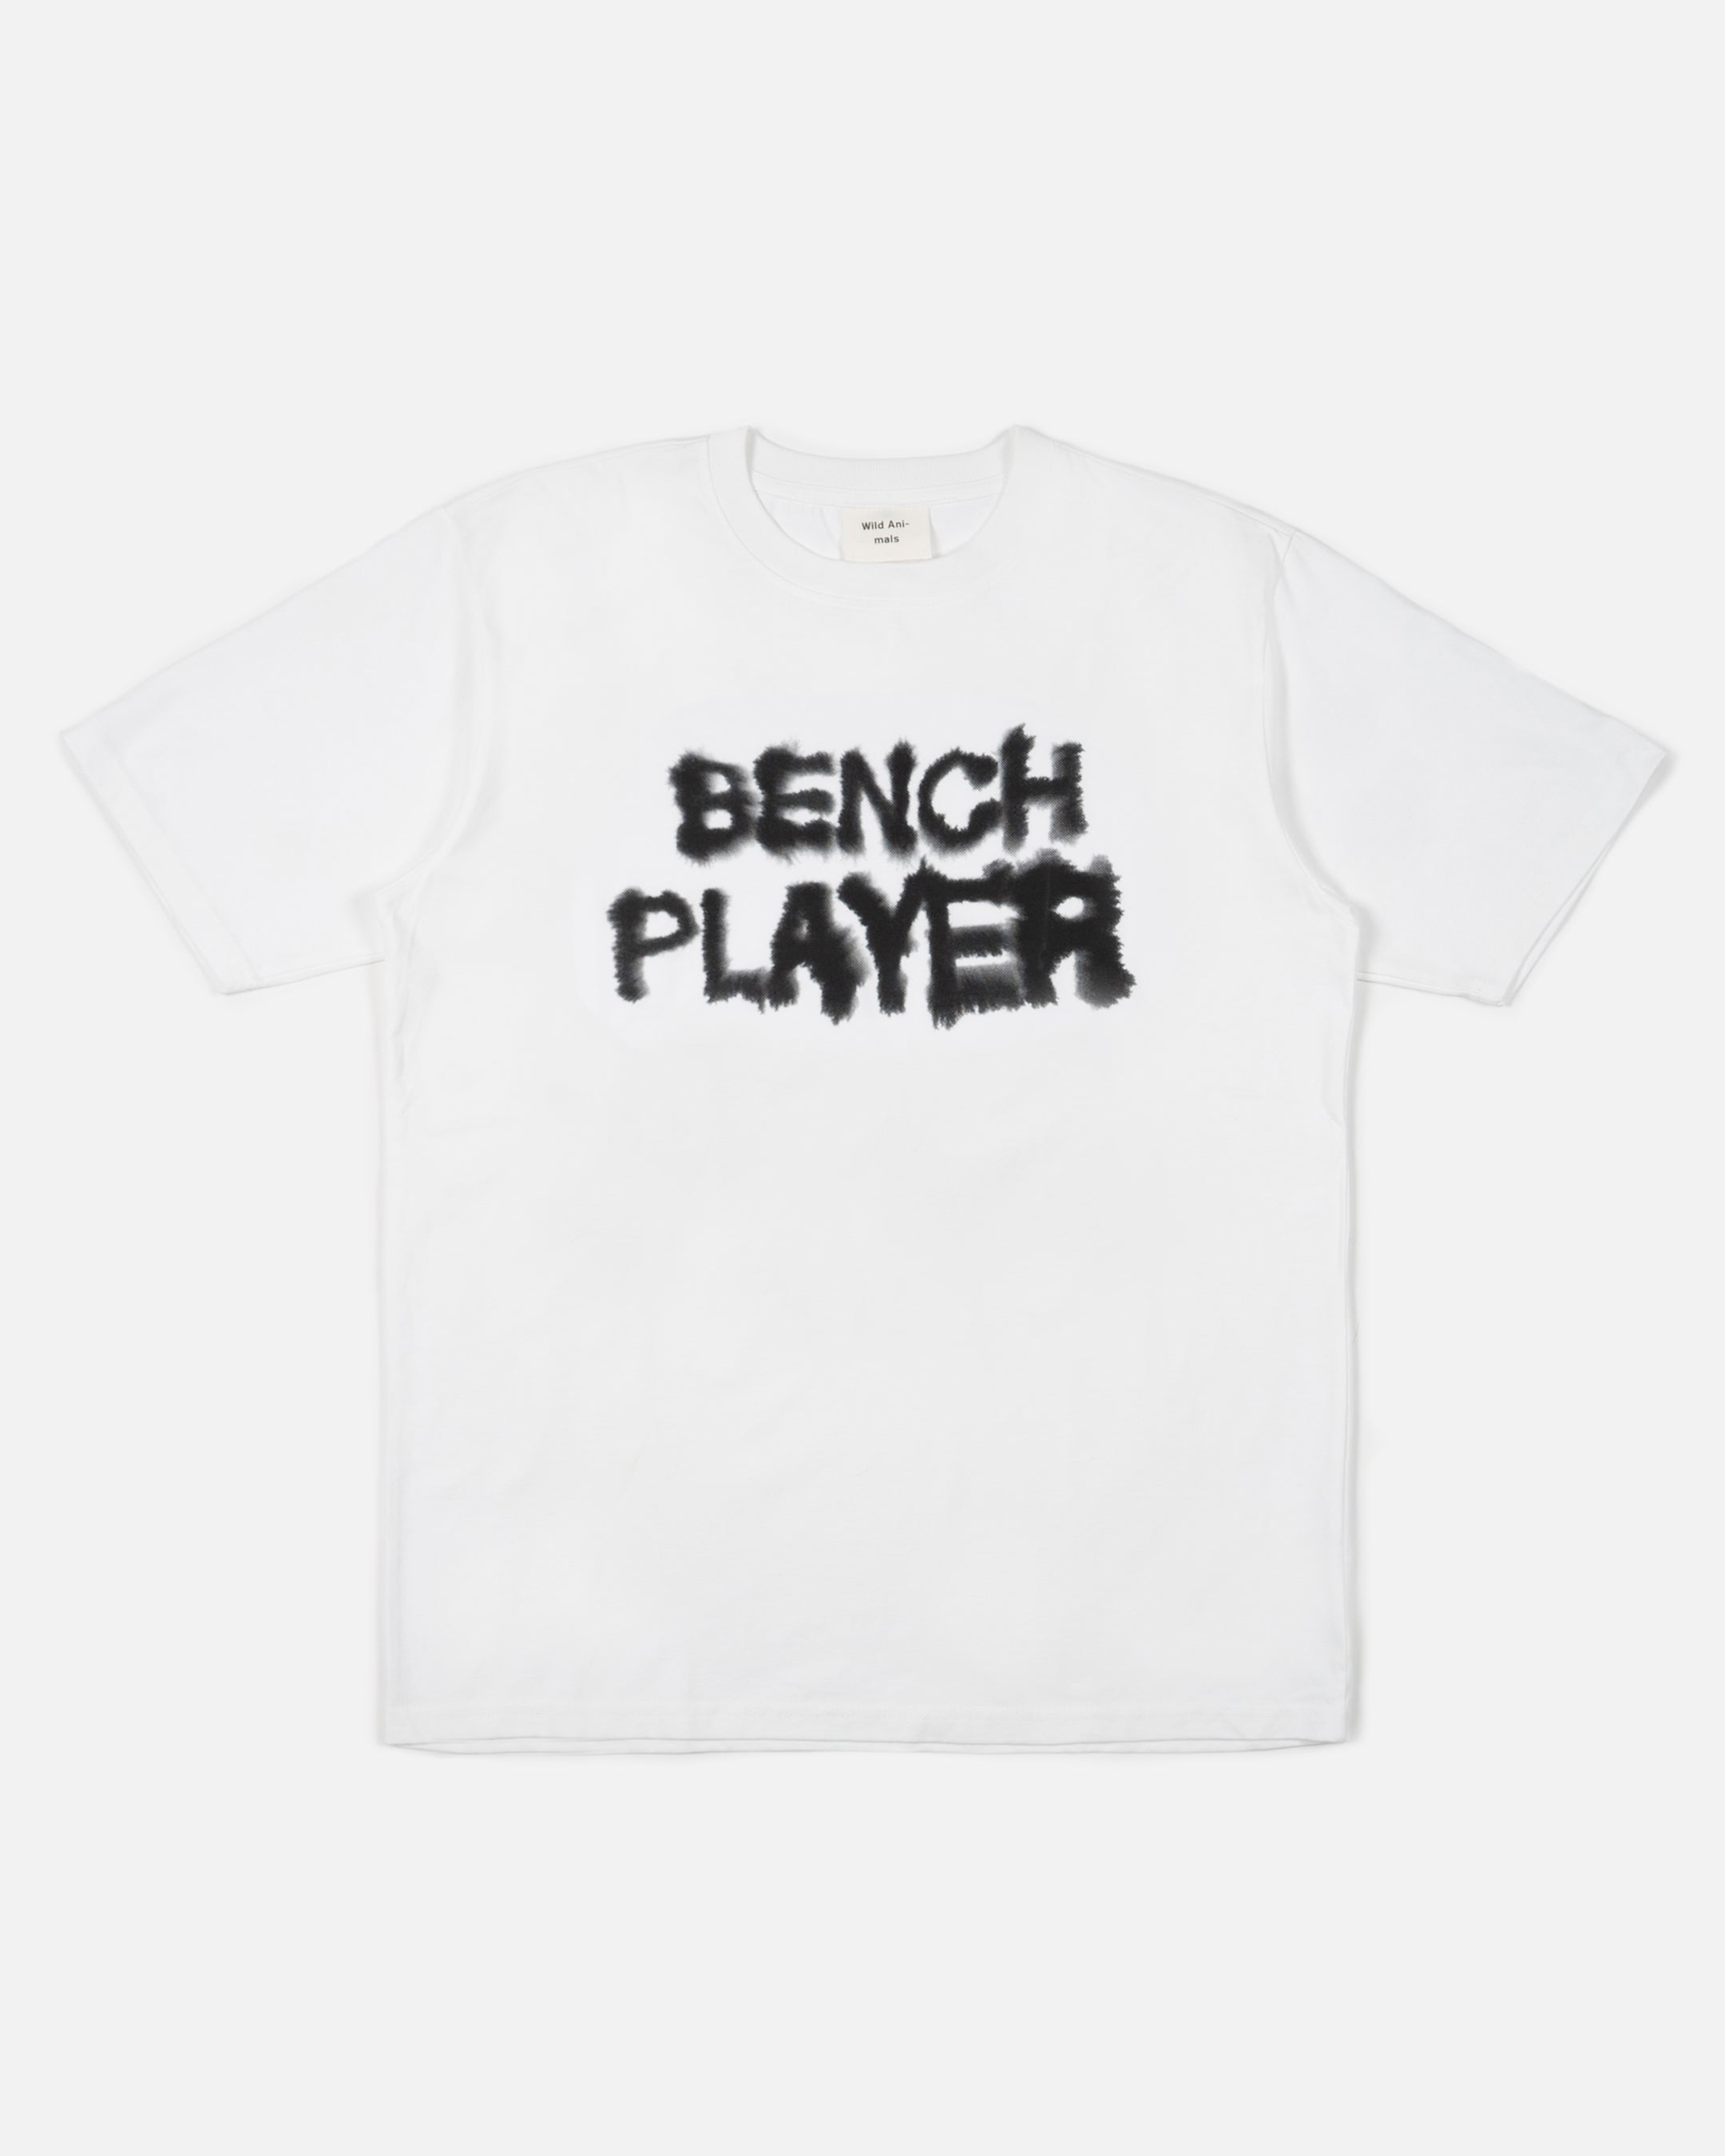 Bench Player Helvetica T-Shirt by Rop van Mierlo – Wild Animals